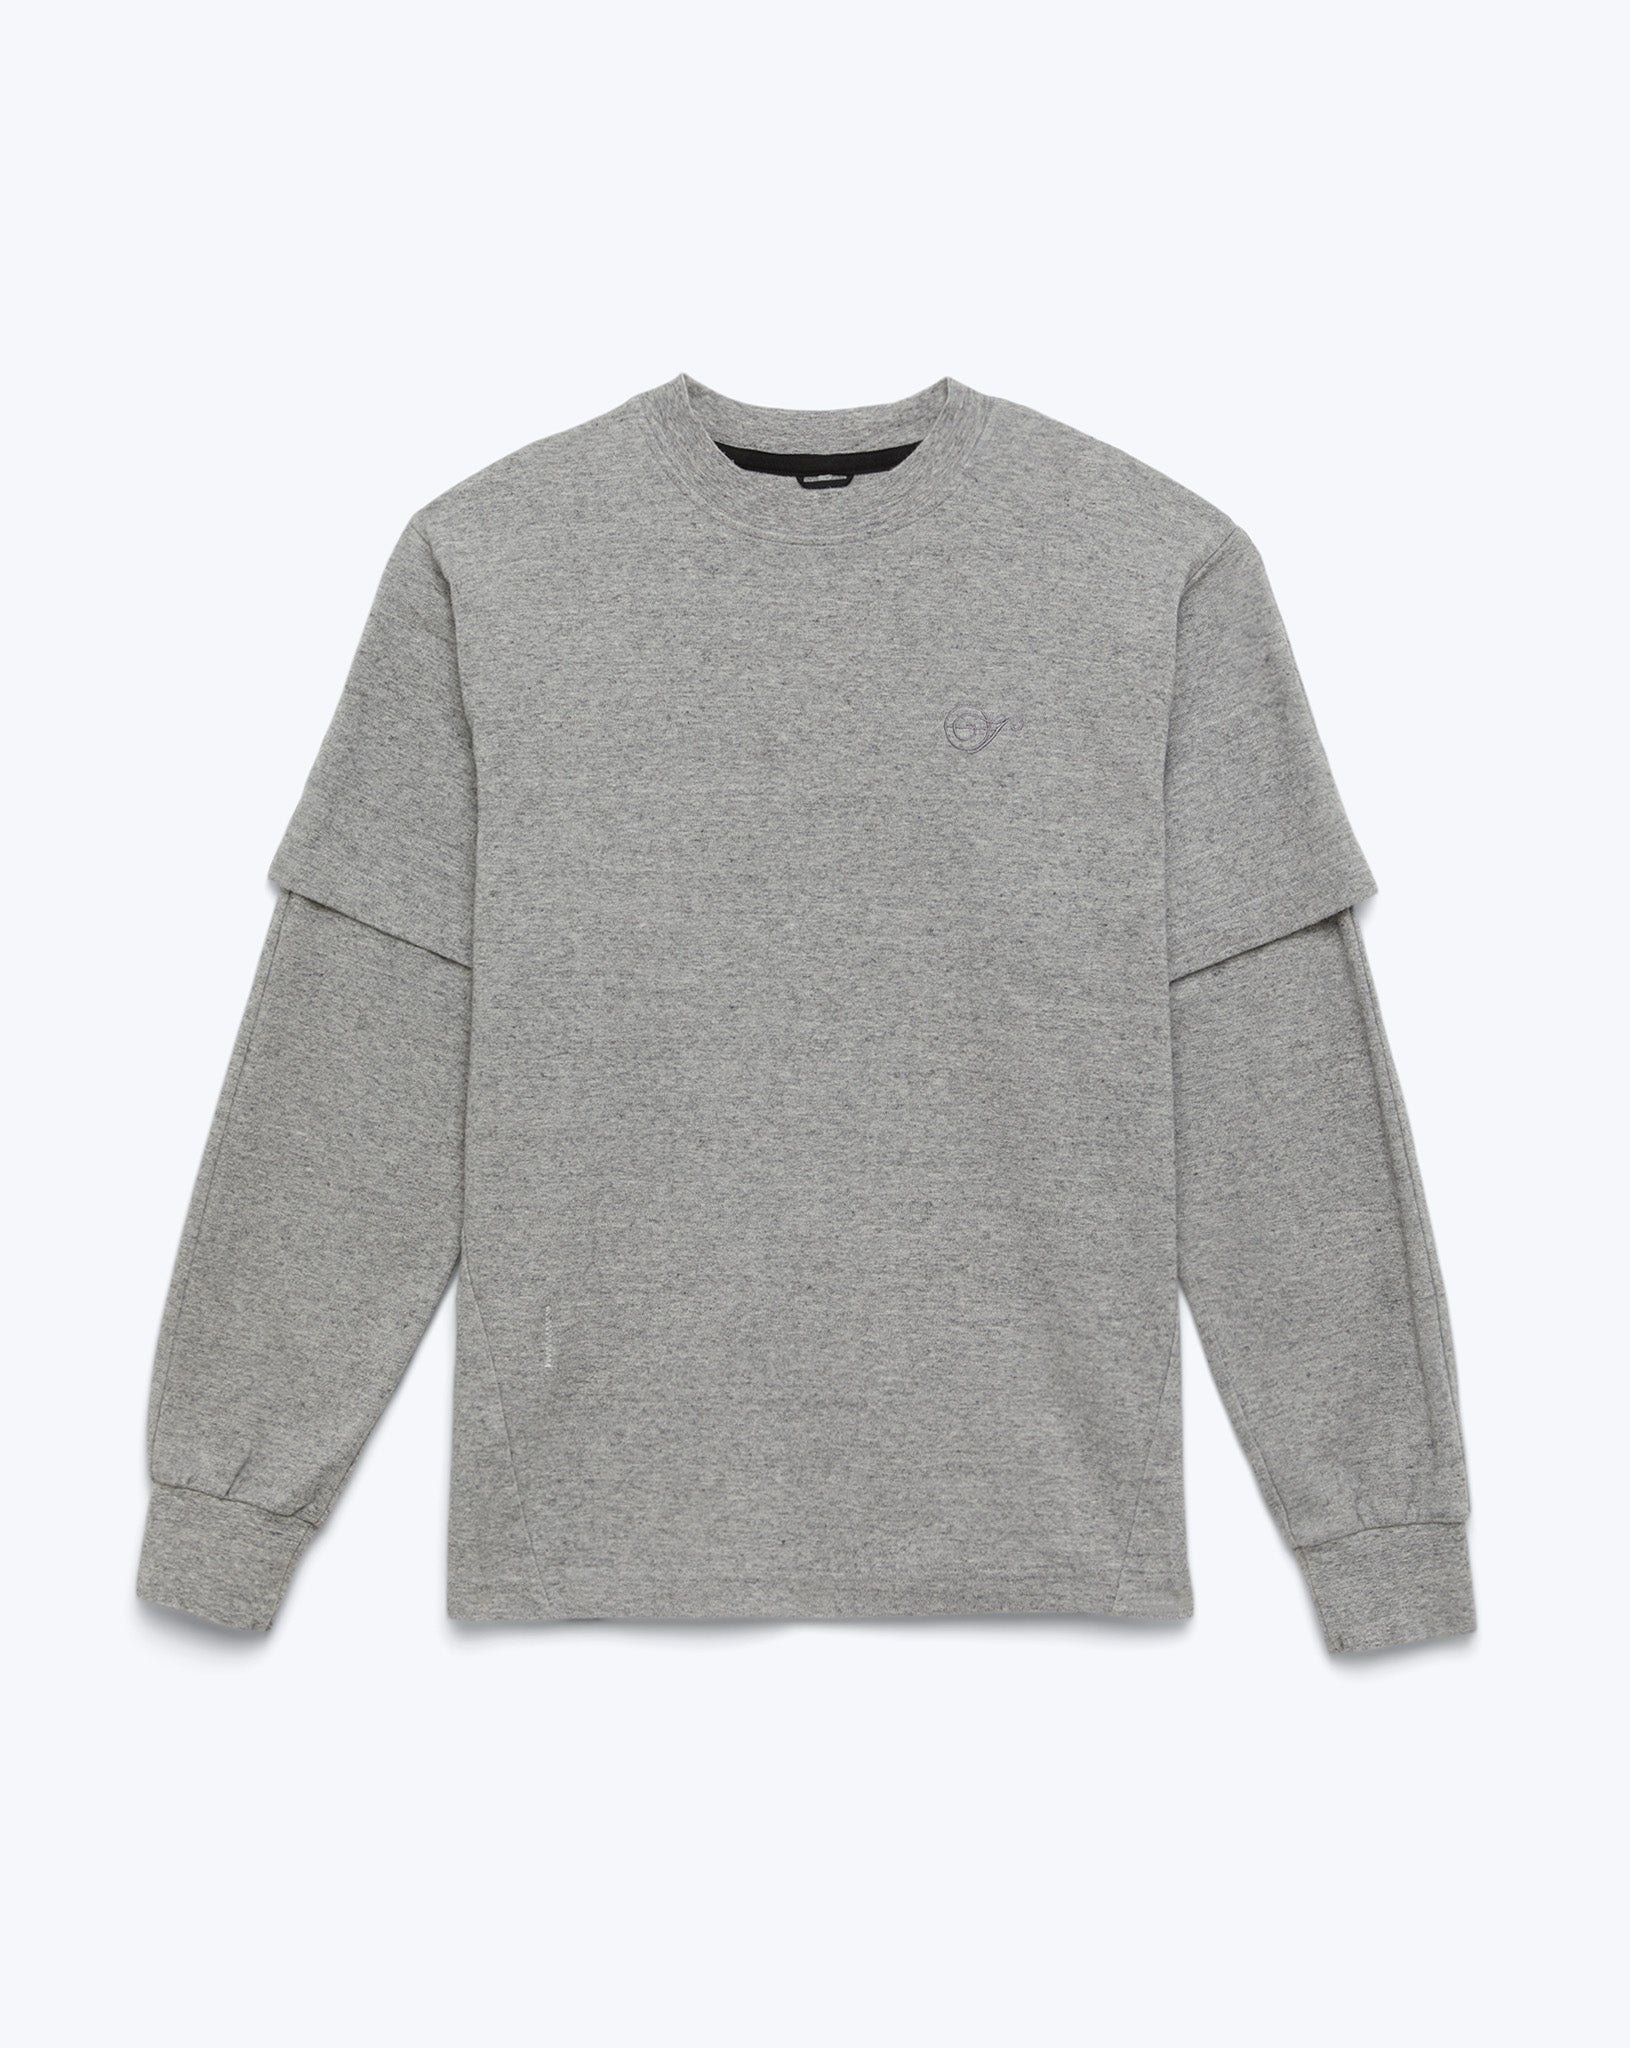 Two Layer Mockneck T-Shirt, Marled Grey